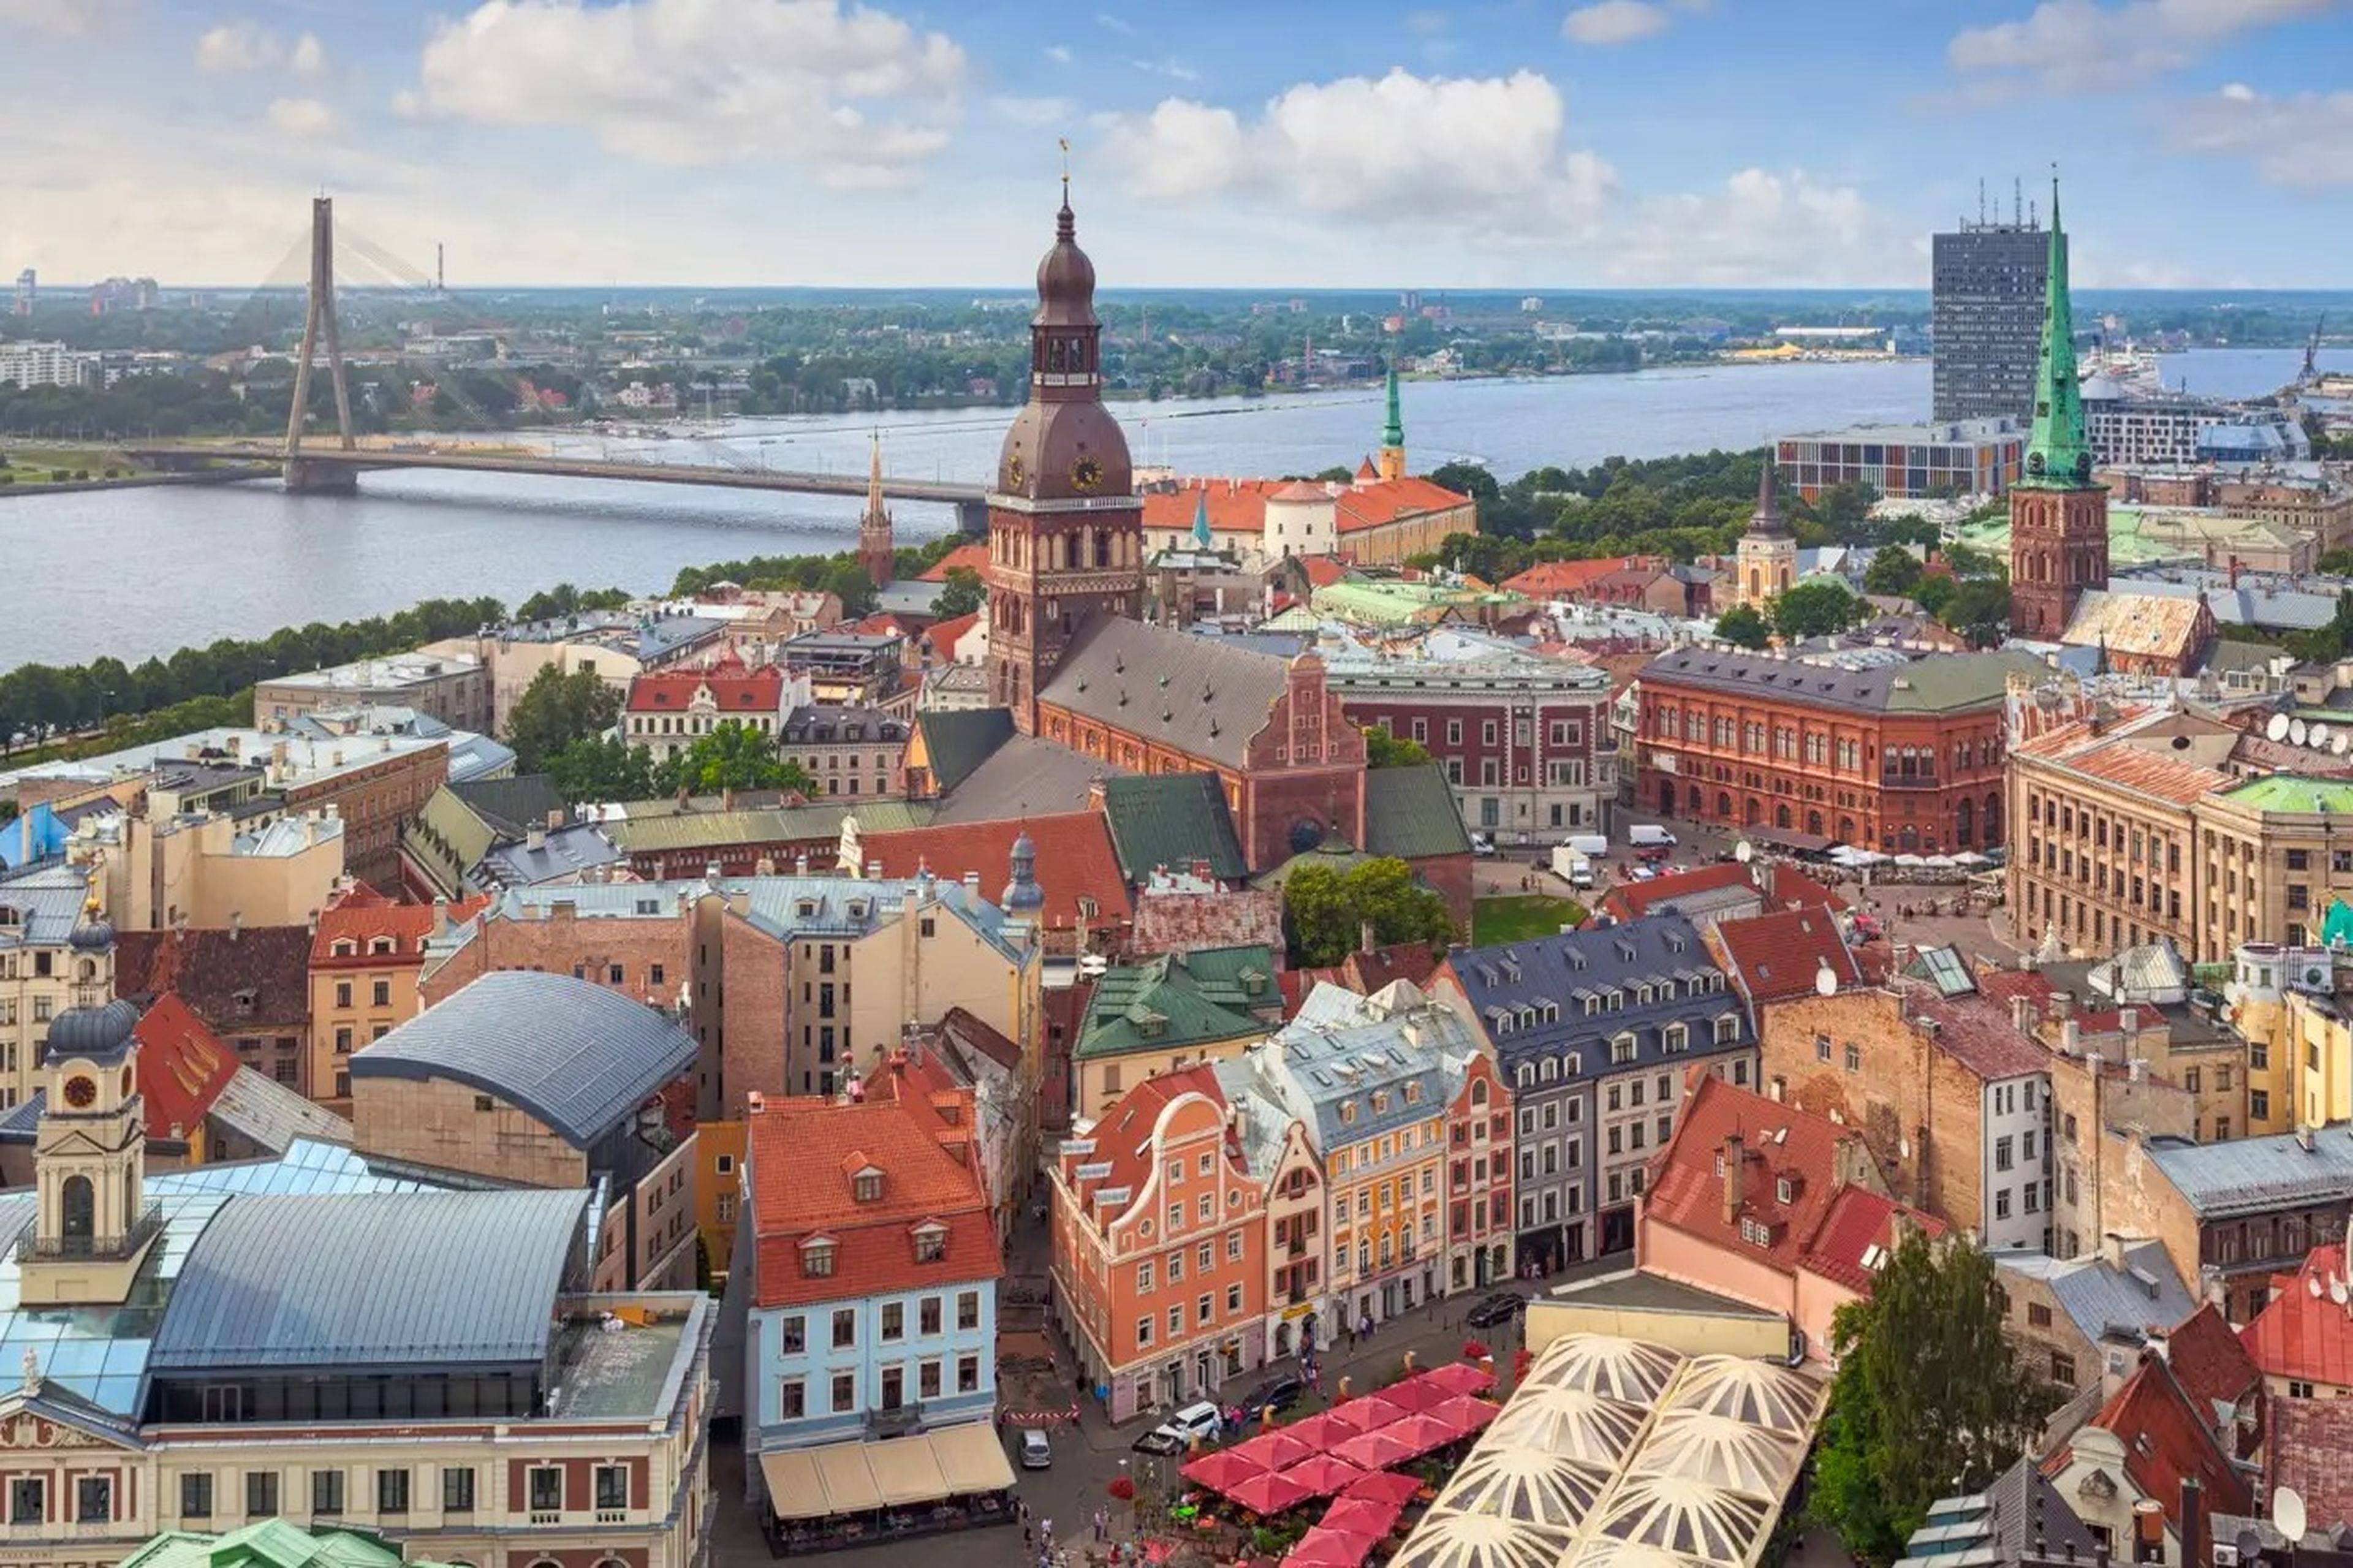 Bird's eye view of the old-world skyline of Riga, Latvia